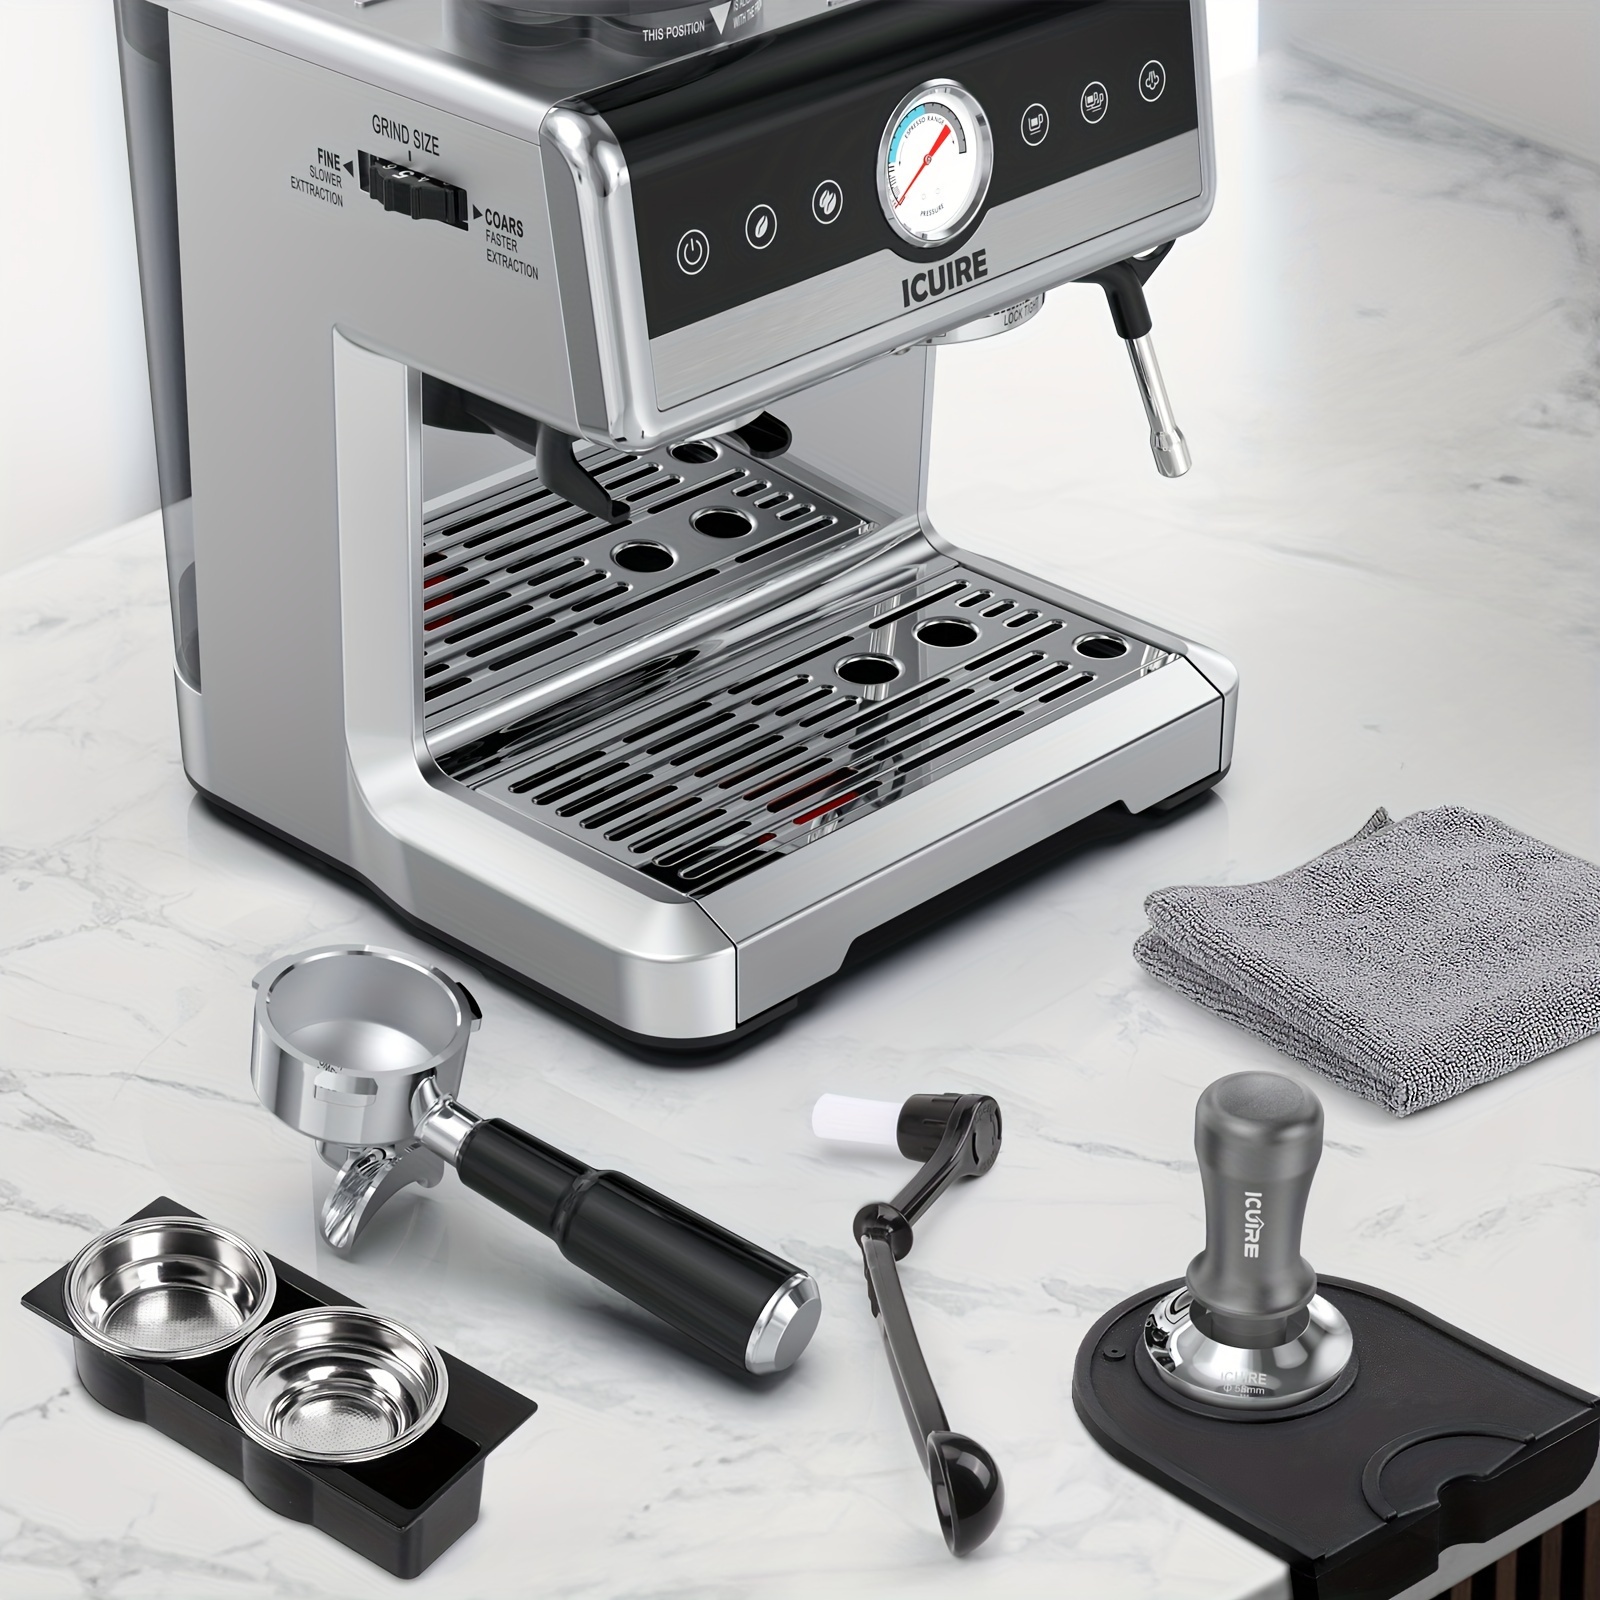 ICUIRE 20 Bar Espresso Machine with Milk Frother, 1.5L/50oz